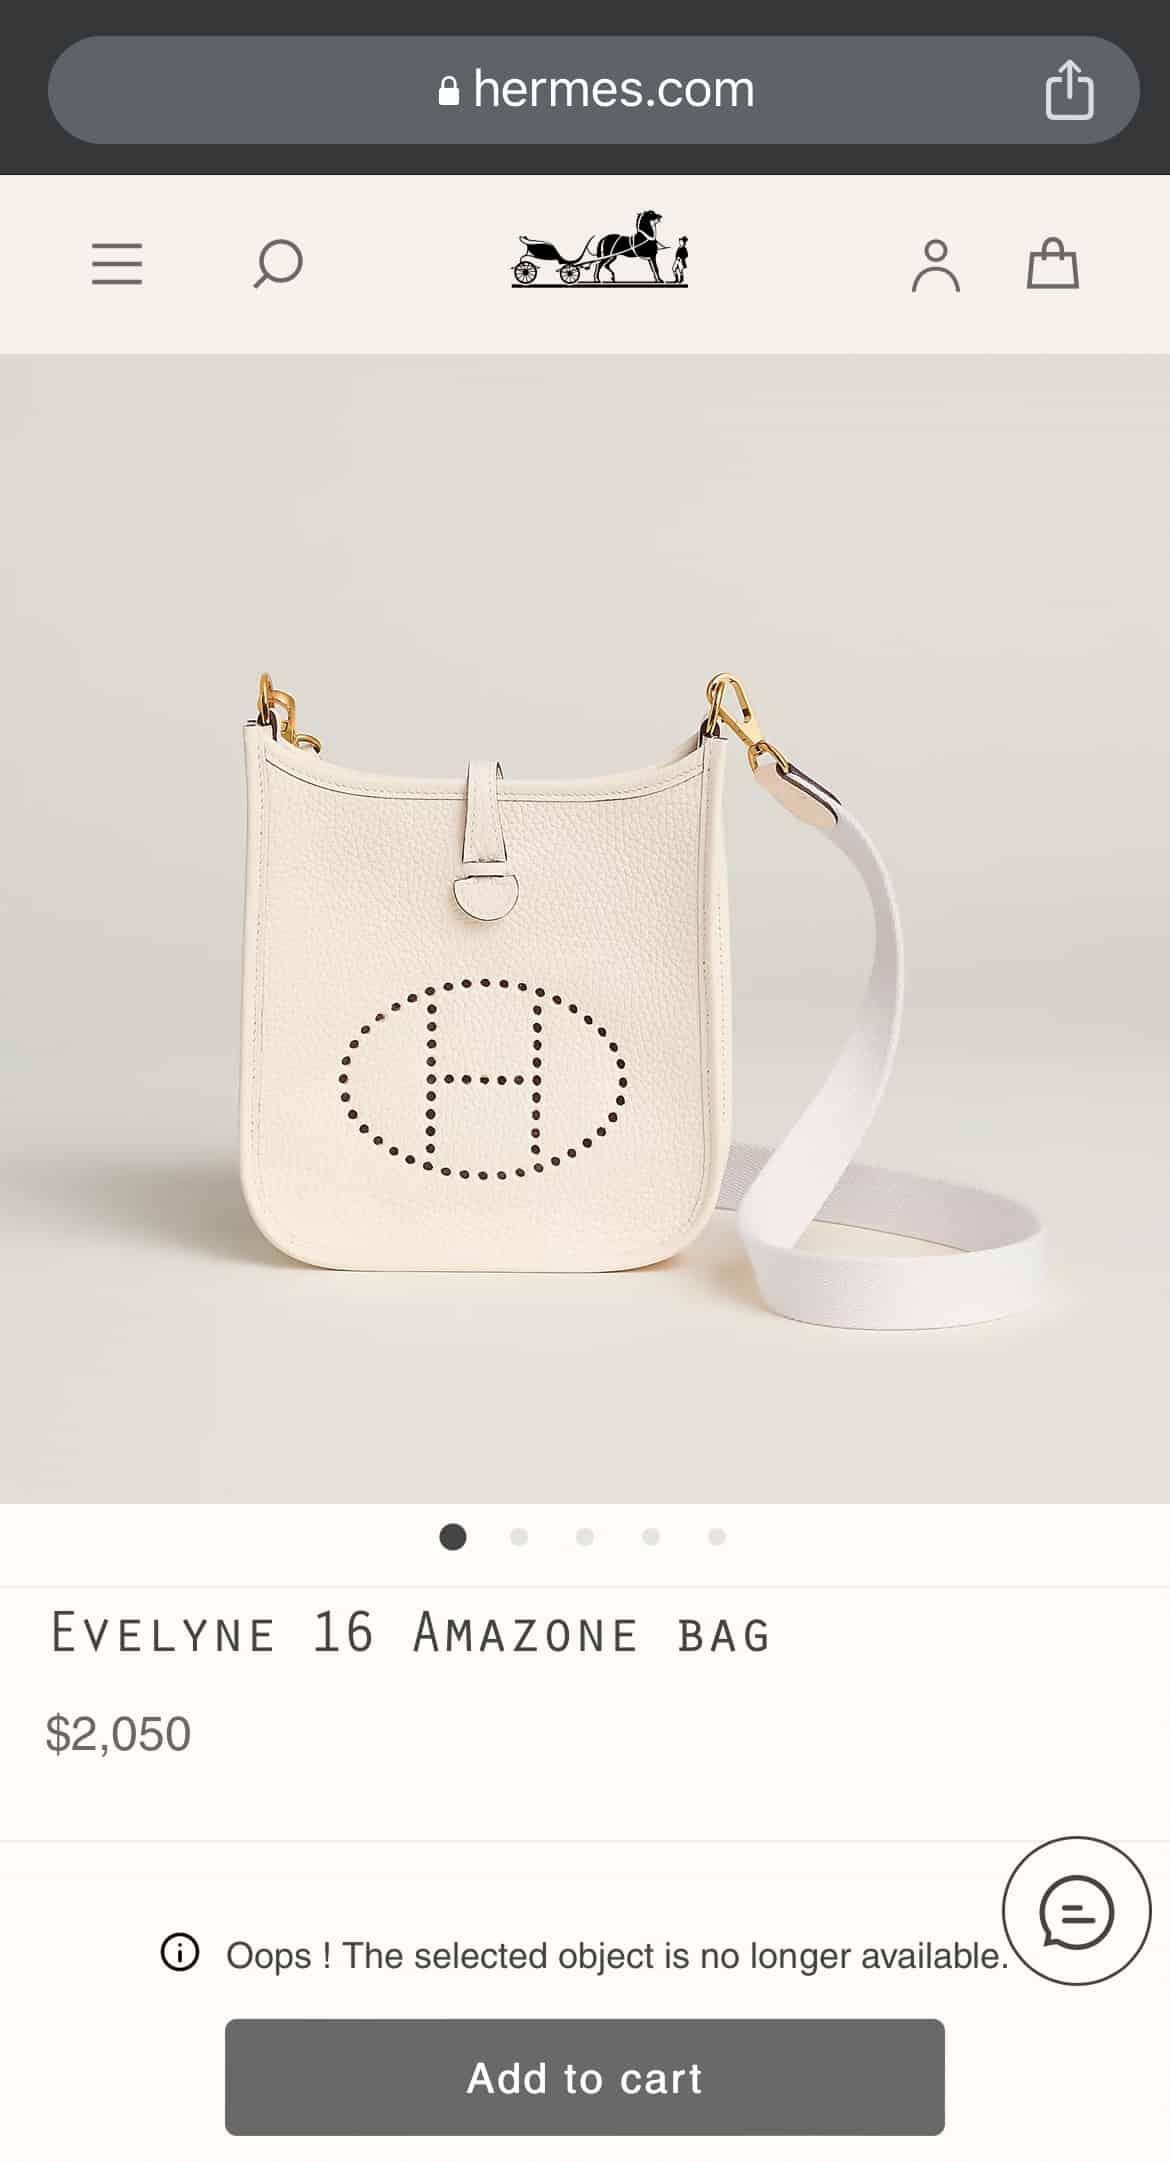 Where to buy a Hermes Evelyne bag online